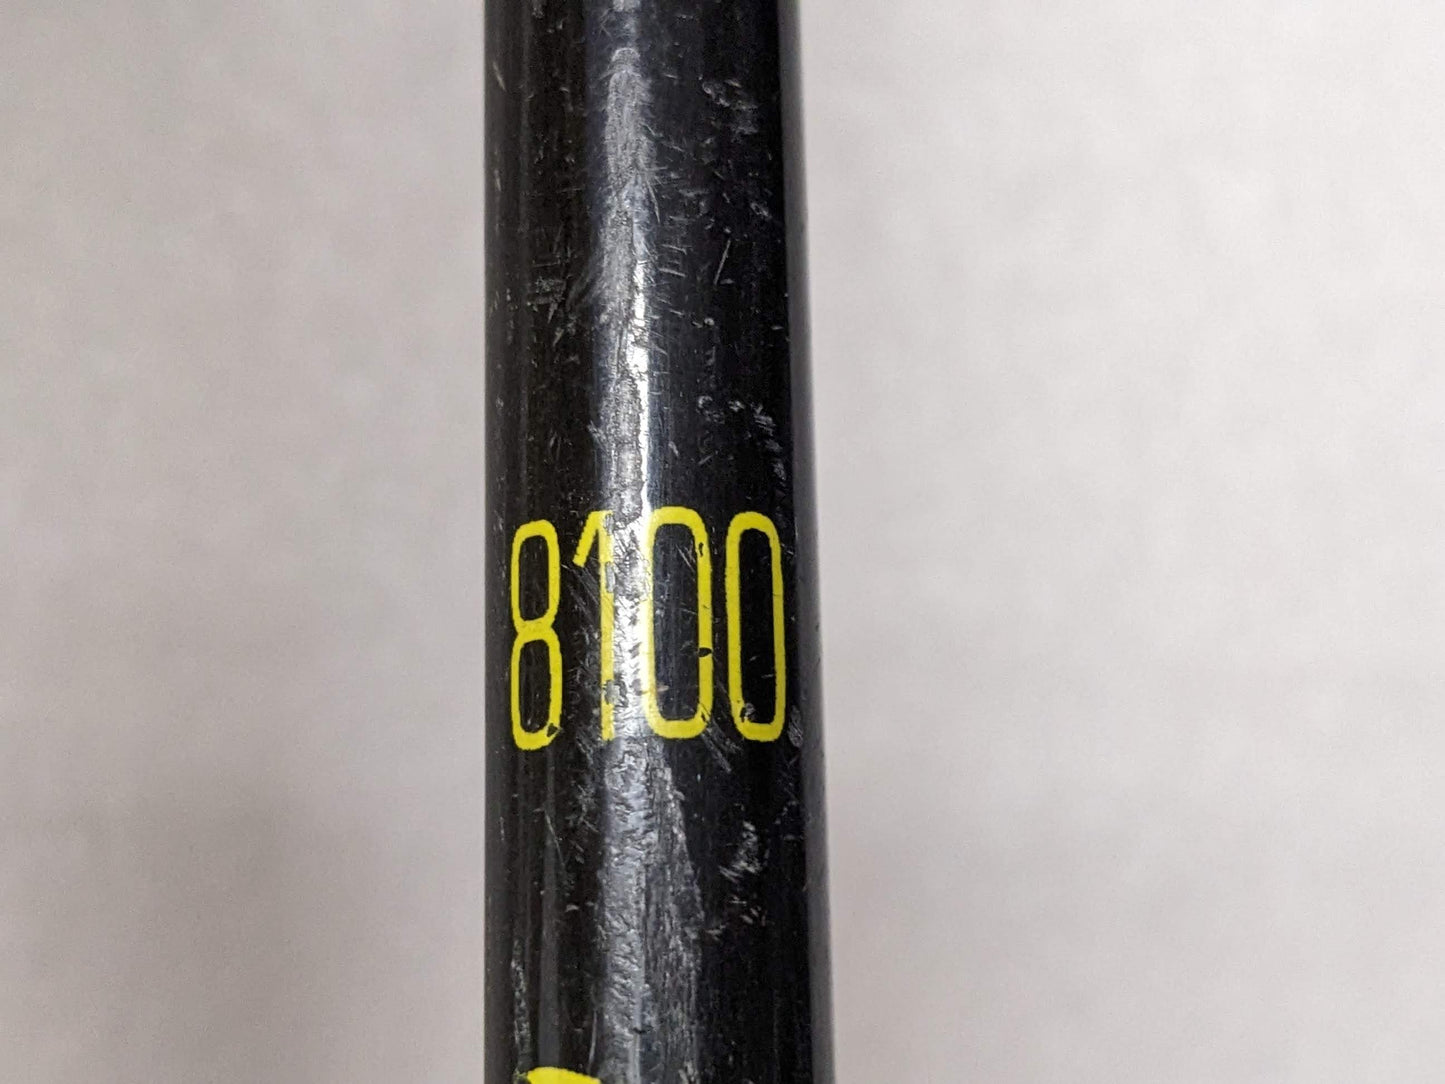 Goode Composite R 8100 Ski Poles Size 90 Cm Color Black Condition Used